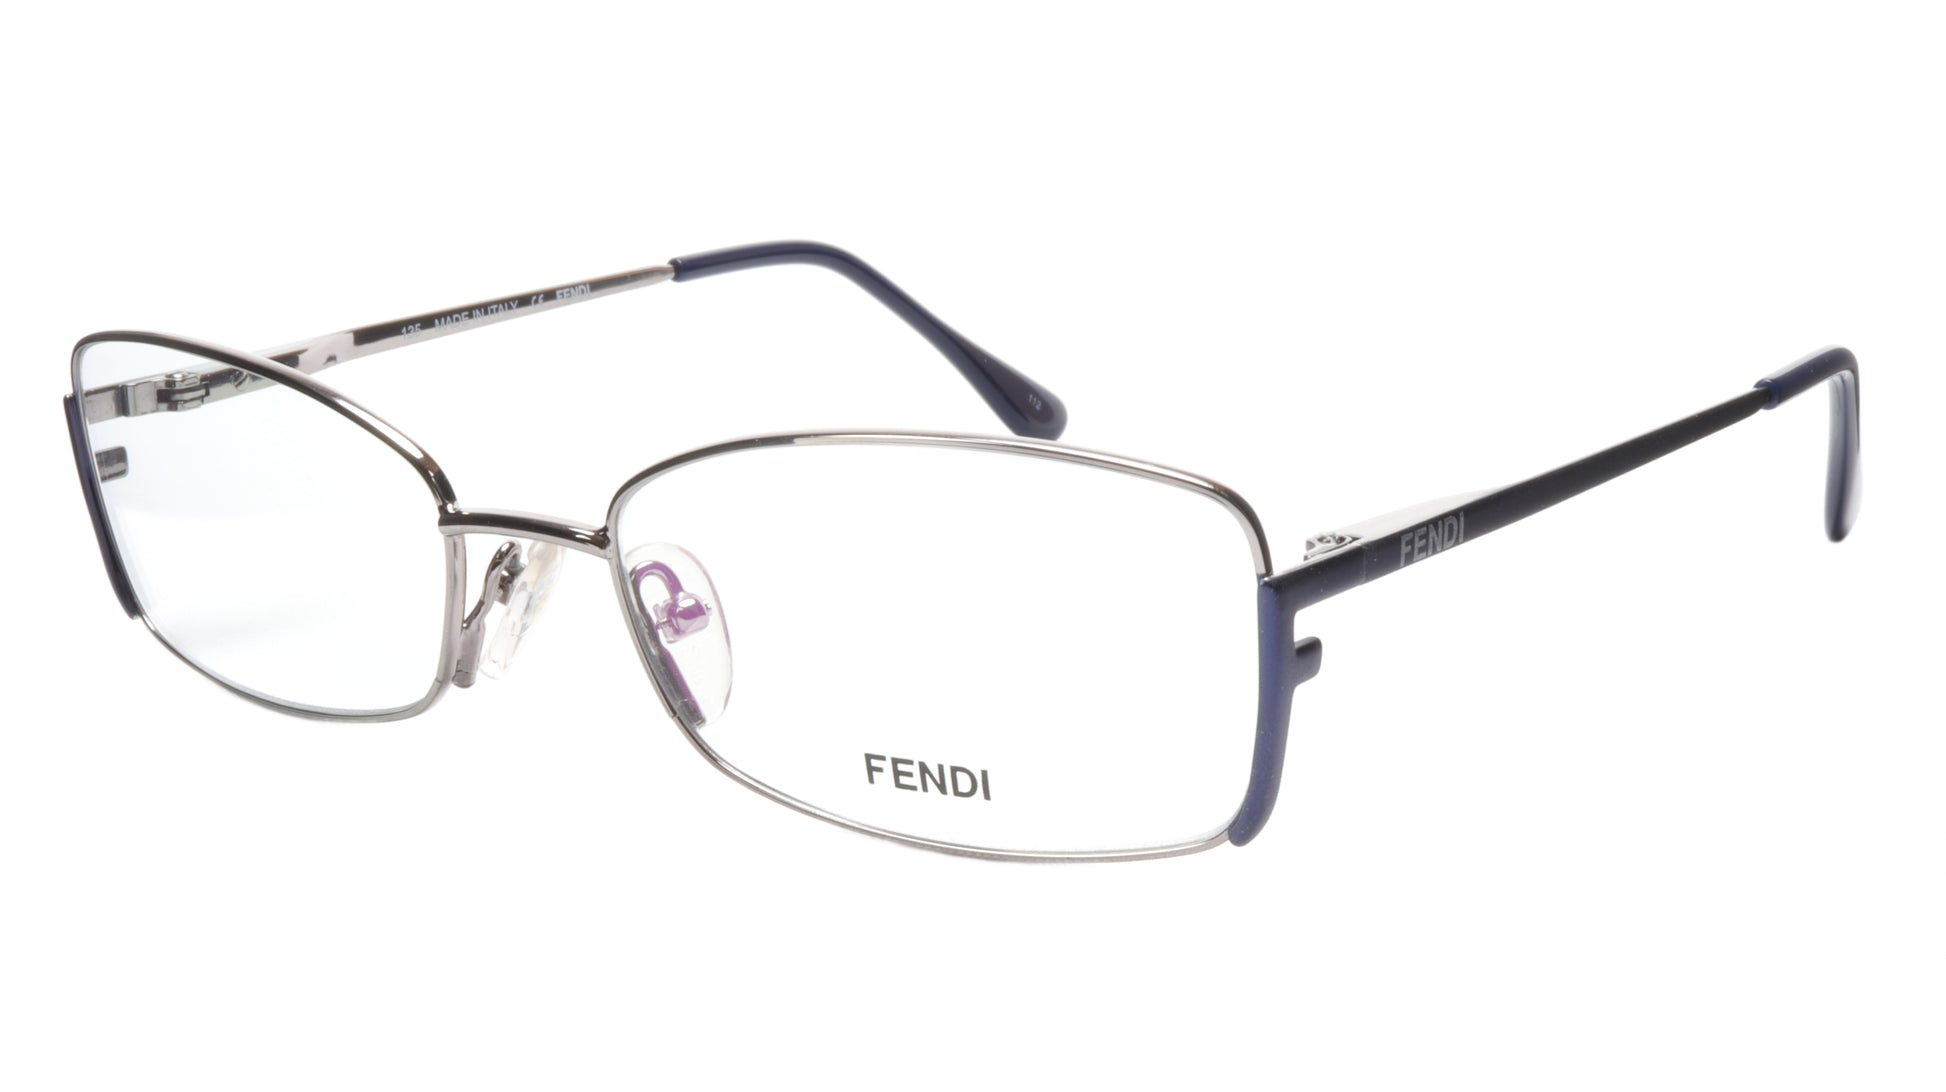 FENDI Eyeglasses Frame F960 (030) Metal Silver Dark Blue Italy Made 52-16-135 30 - Frame Bay